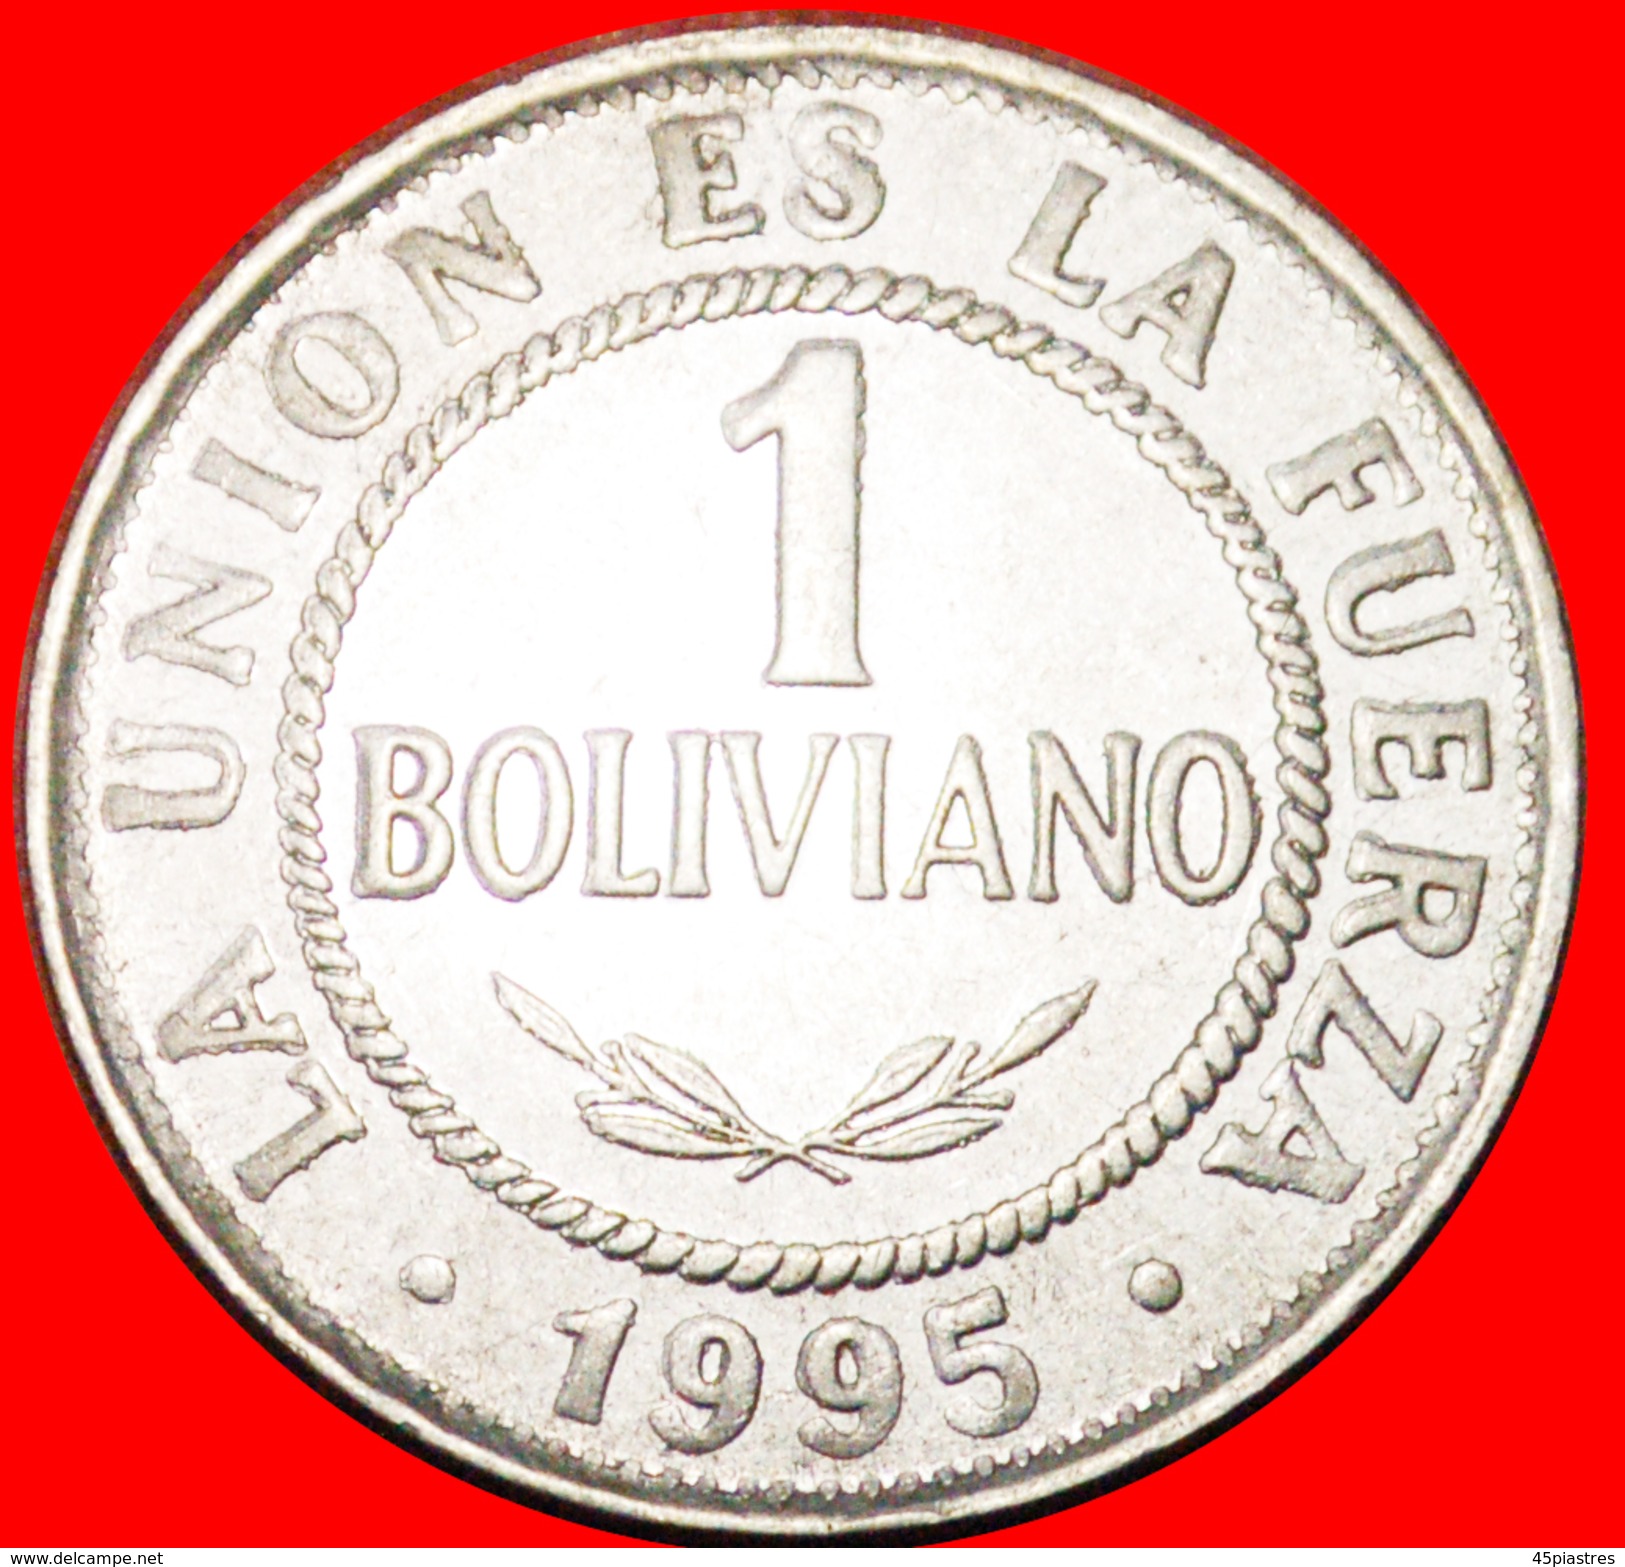 § SUN: BOLIVIA &#x2605; 1 BOLIVIANO 1995! LOW START&#x2605; NO RESERVE! - Bolivia